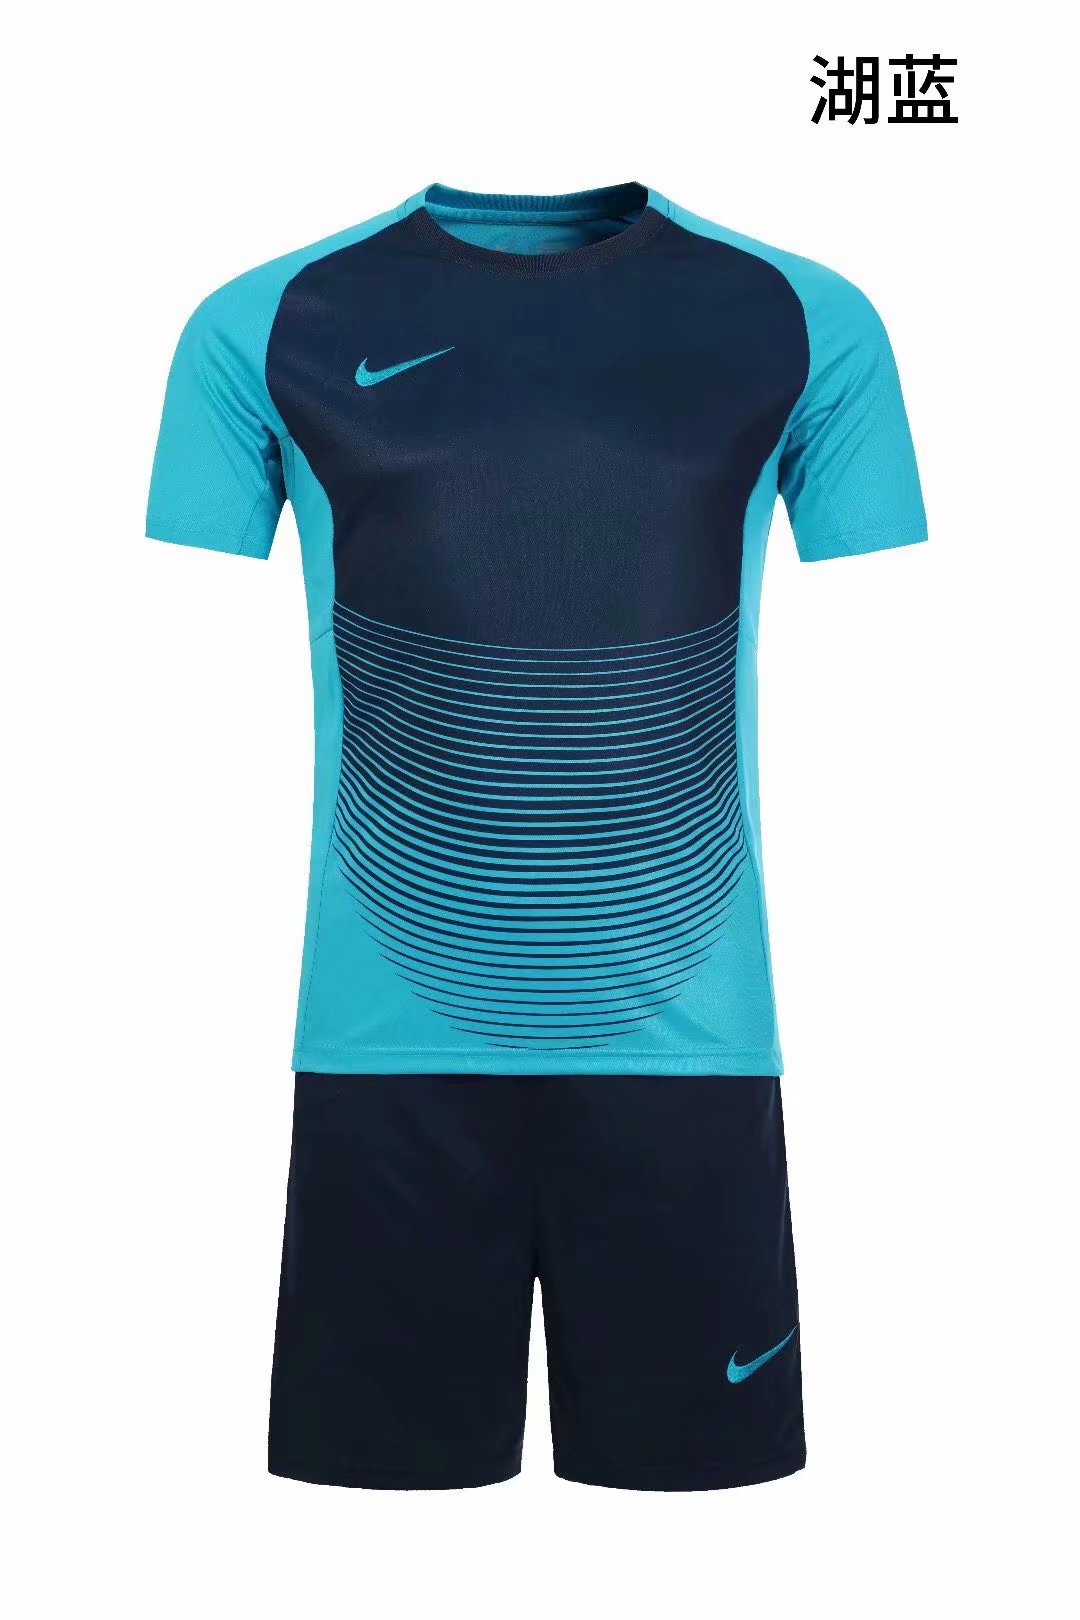 Nike Soccer Team Uniforms 014